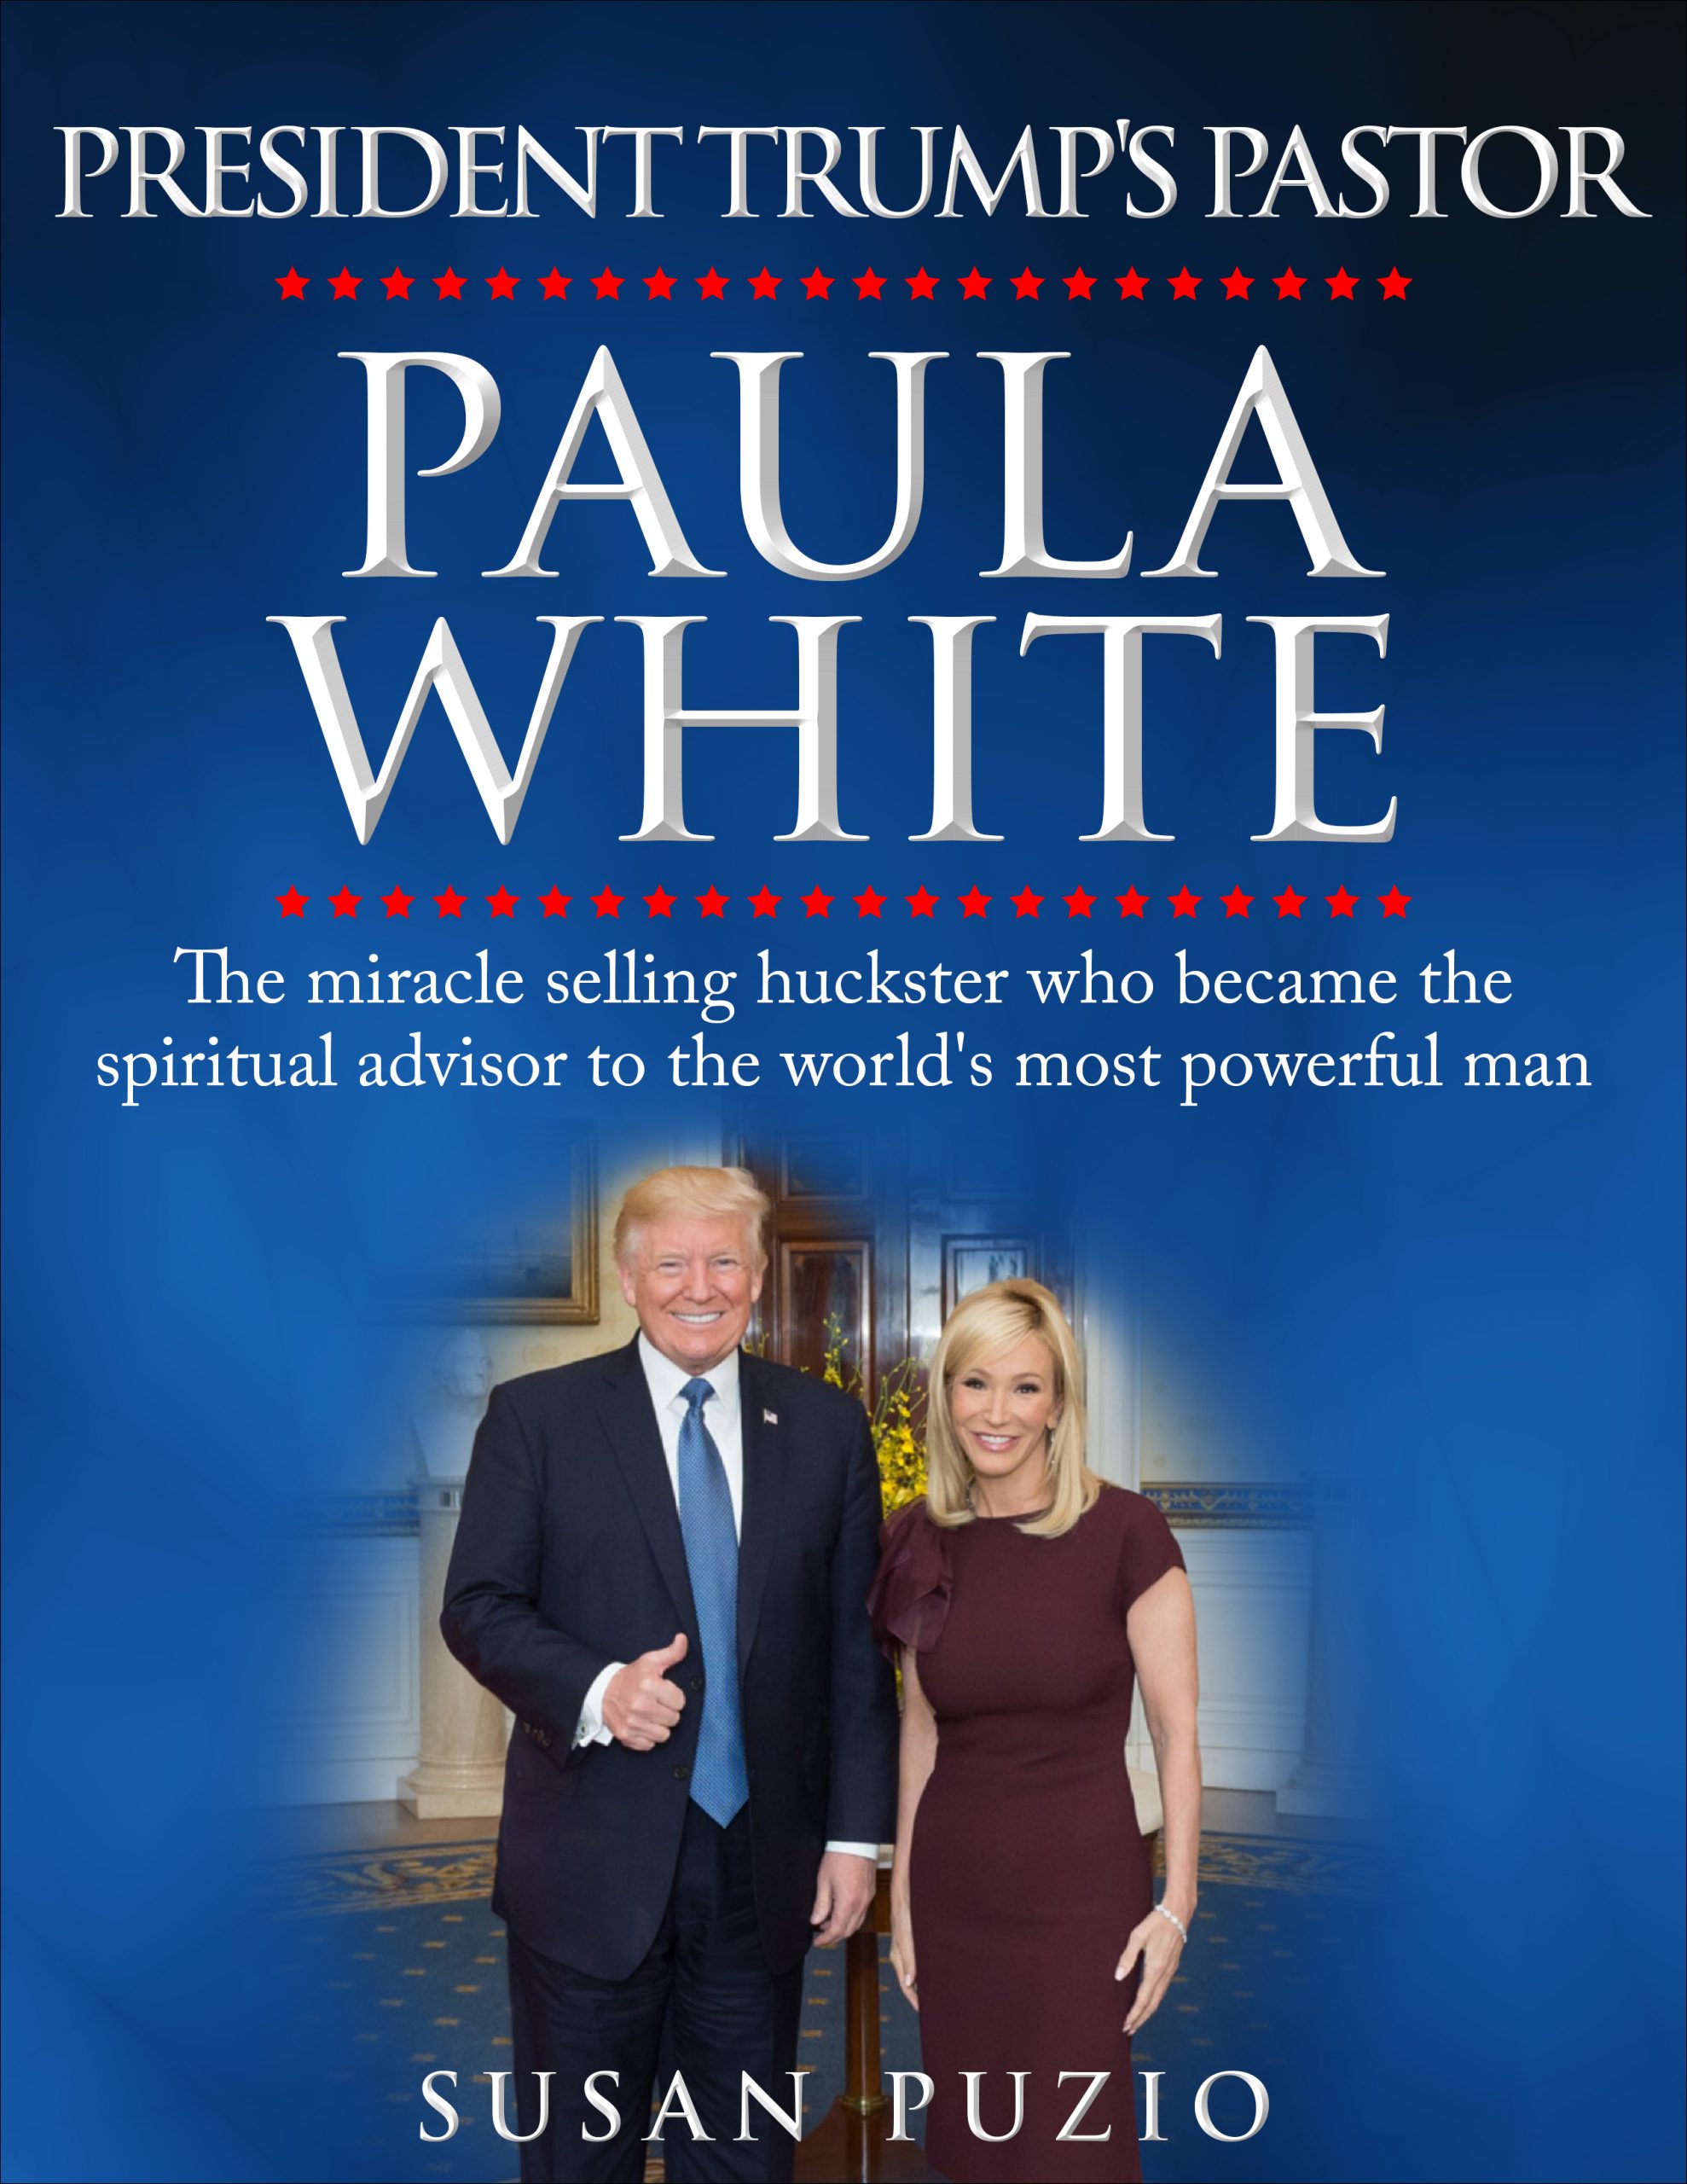 Read my book available on Amazon-Paula White-President Trump’s Pastor